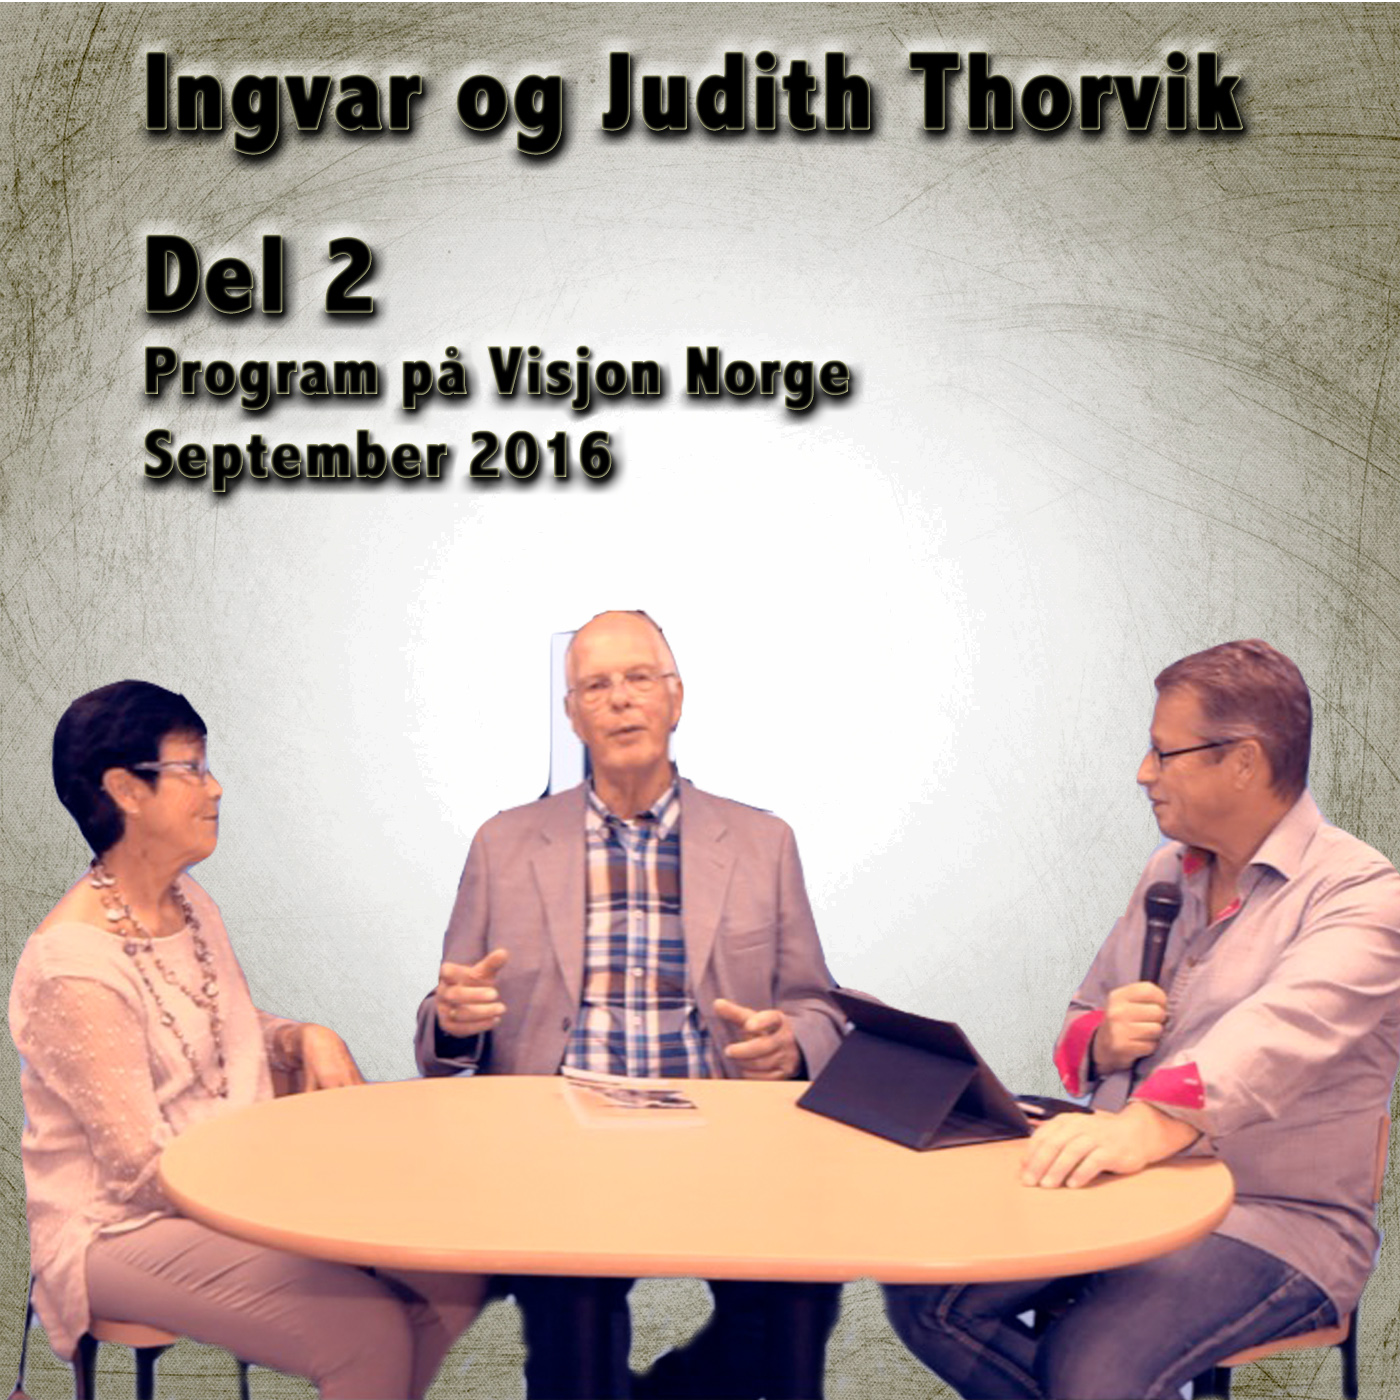 Ingvar og Judith Thorvik del 2